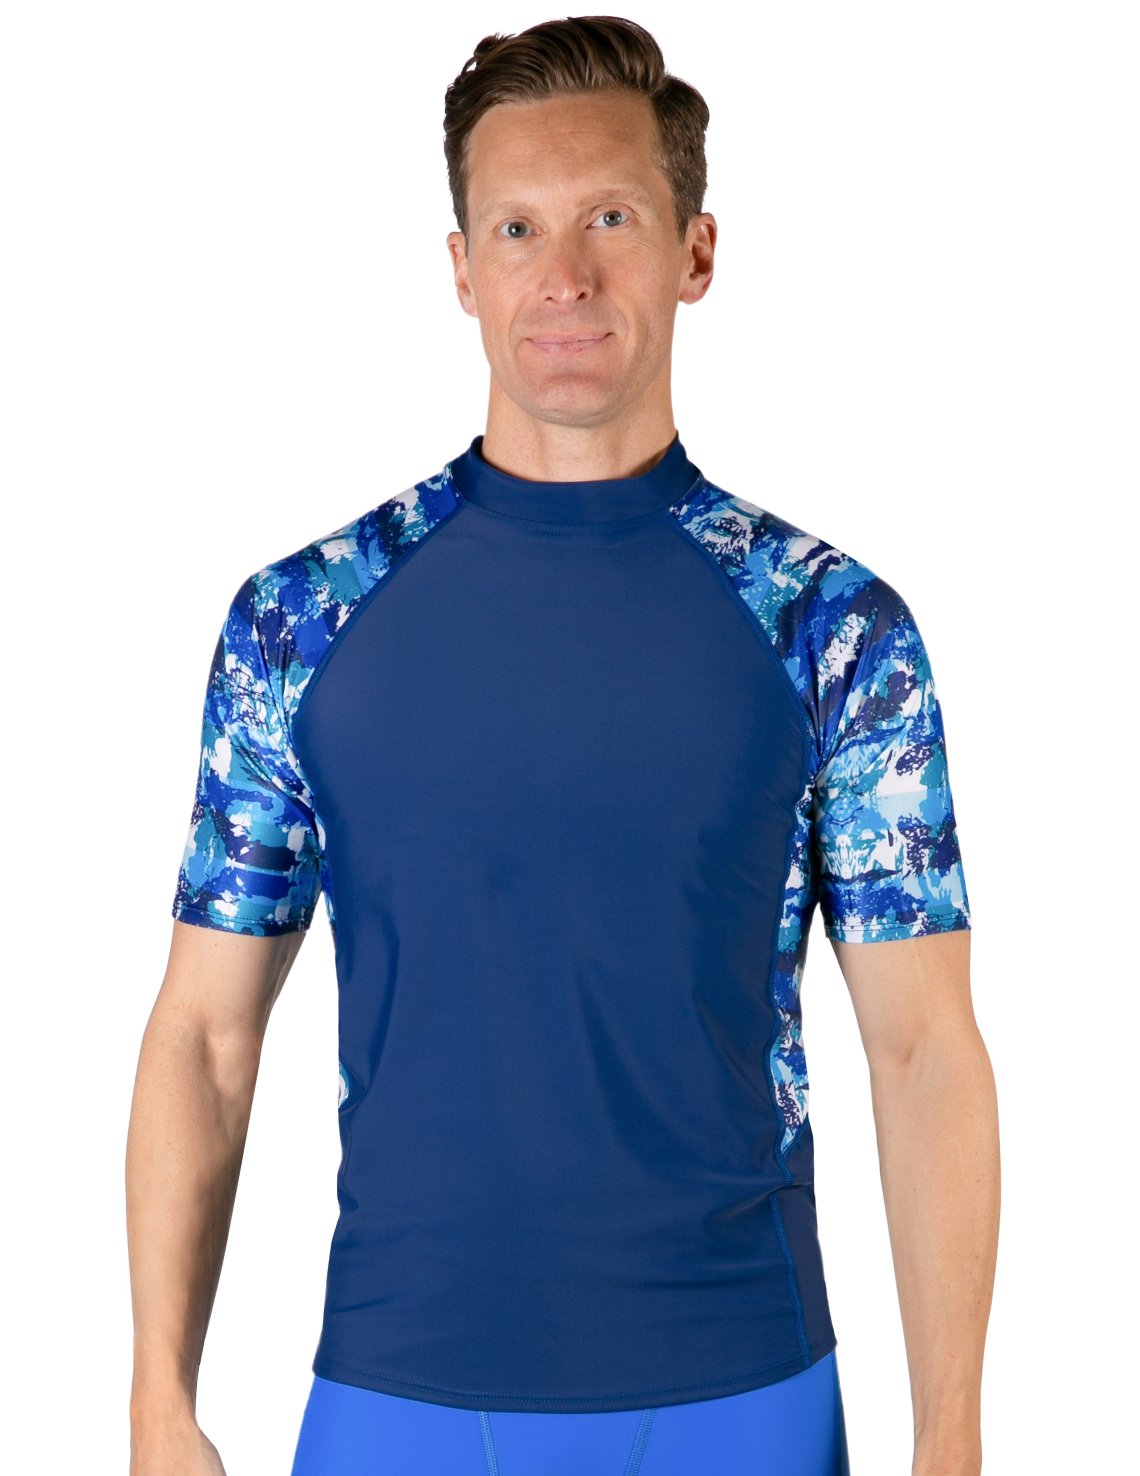 Men's Swim Performance Short Sleeve Rash Guard - Navy / Blue Camo